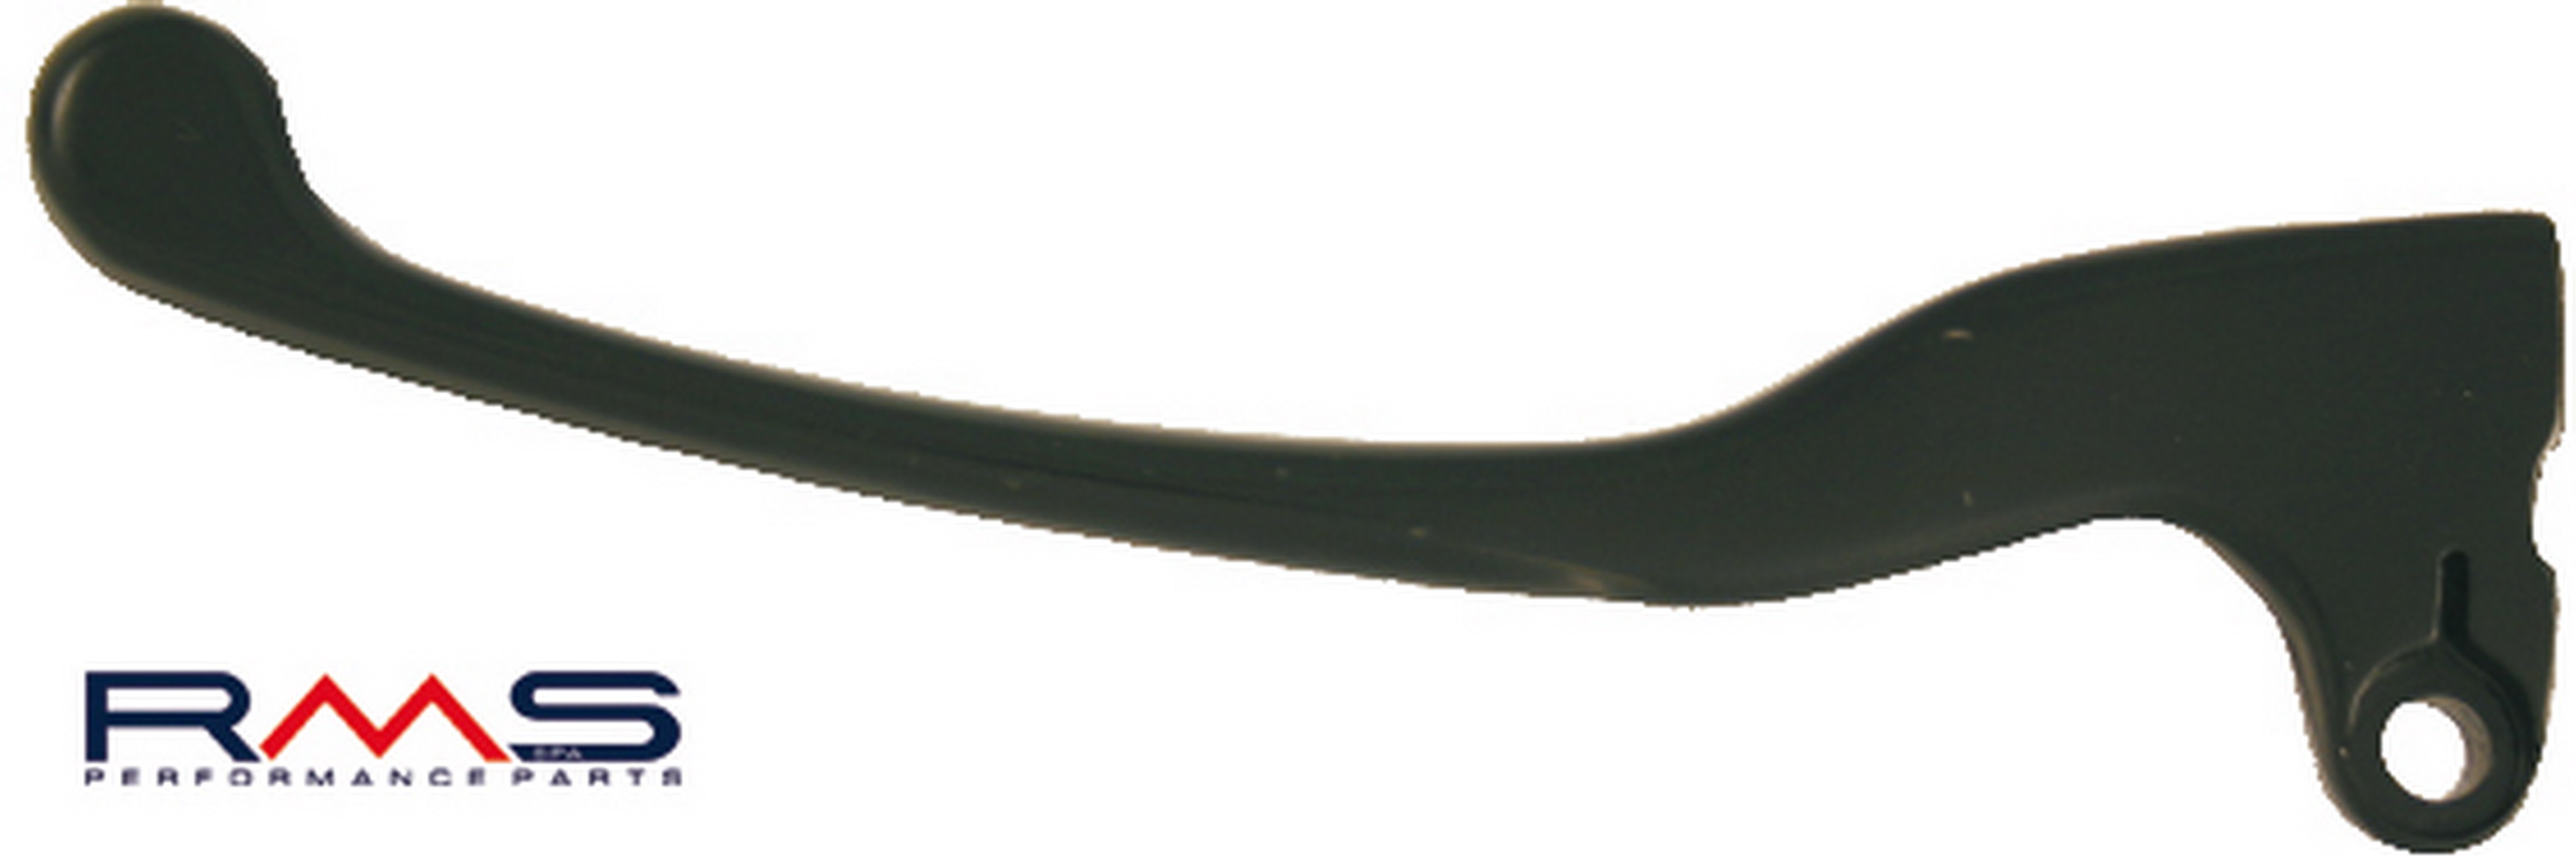 Obrázek produktu Páčka RMS 184100041 levý černý